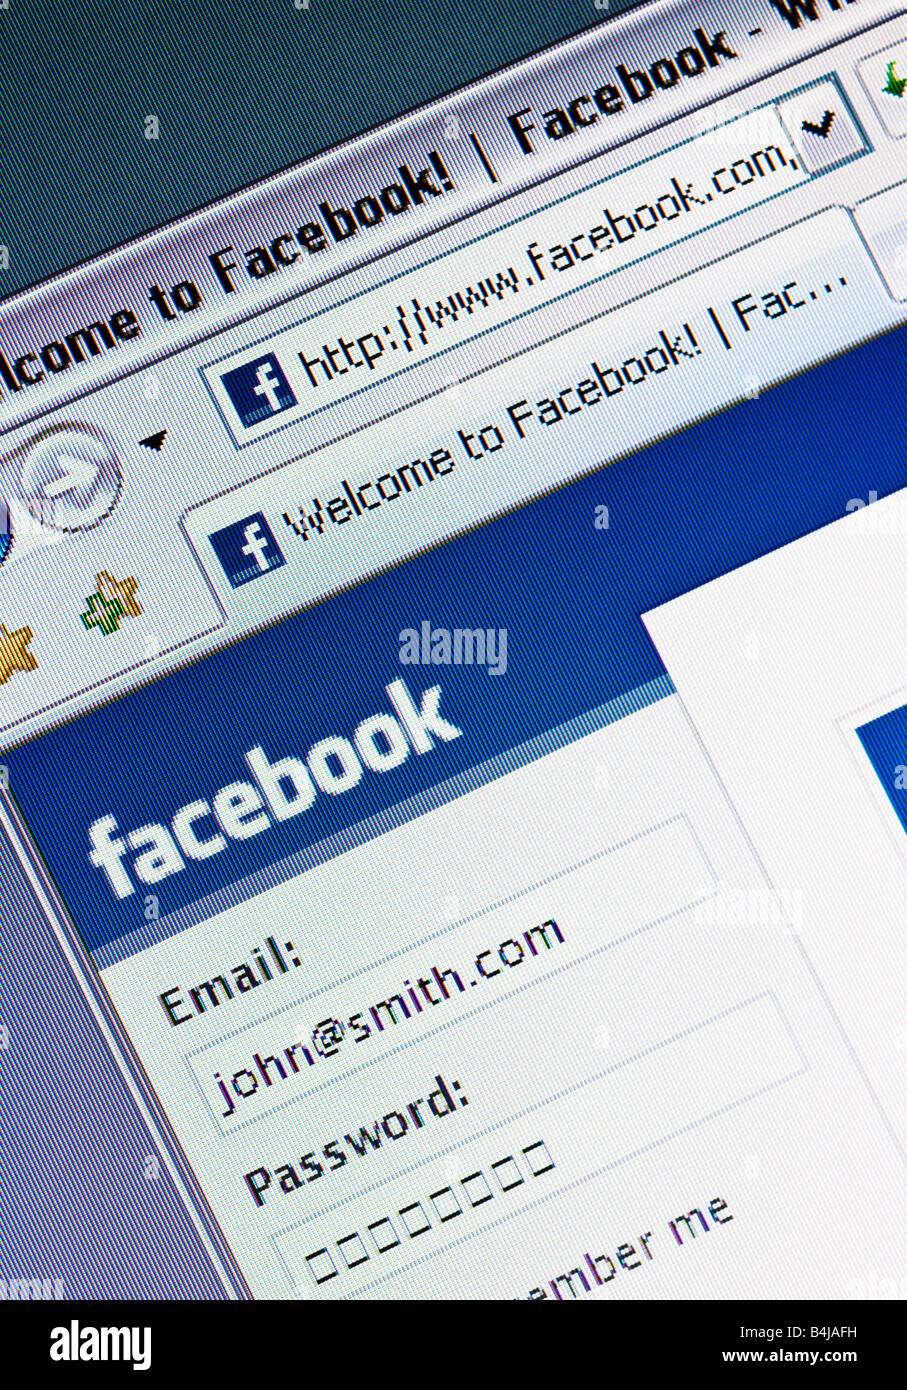 Facebook social networking website splash screen and logo Stock Photo